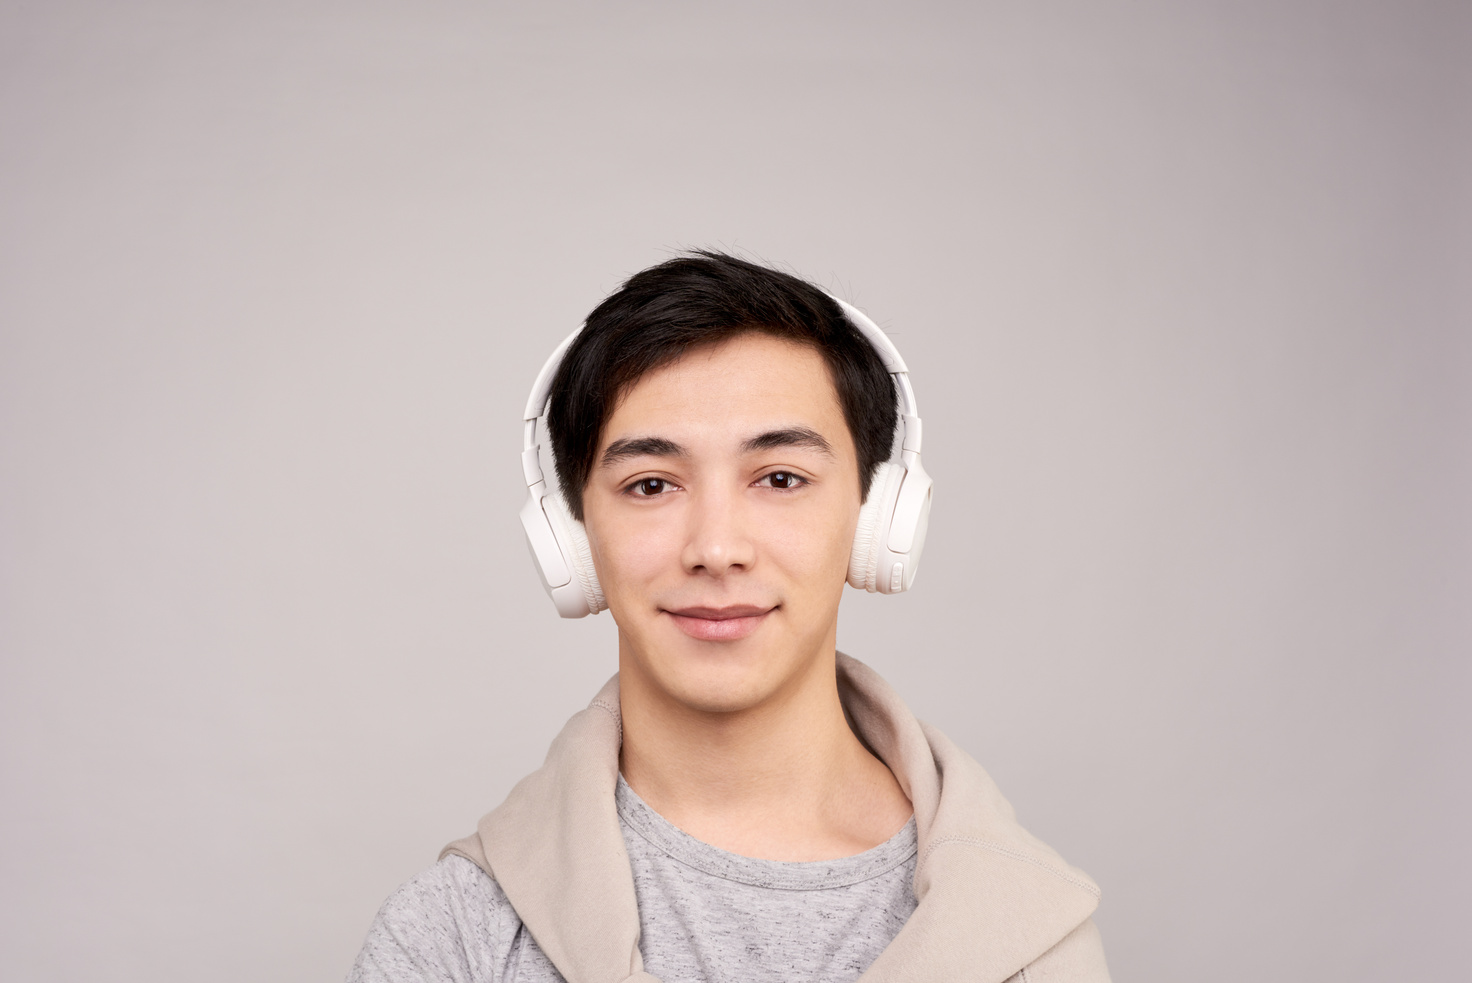 Portrait Photography of Man Wearing White Wireless Headphones